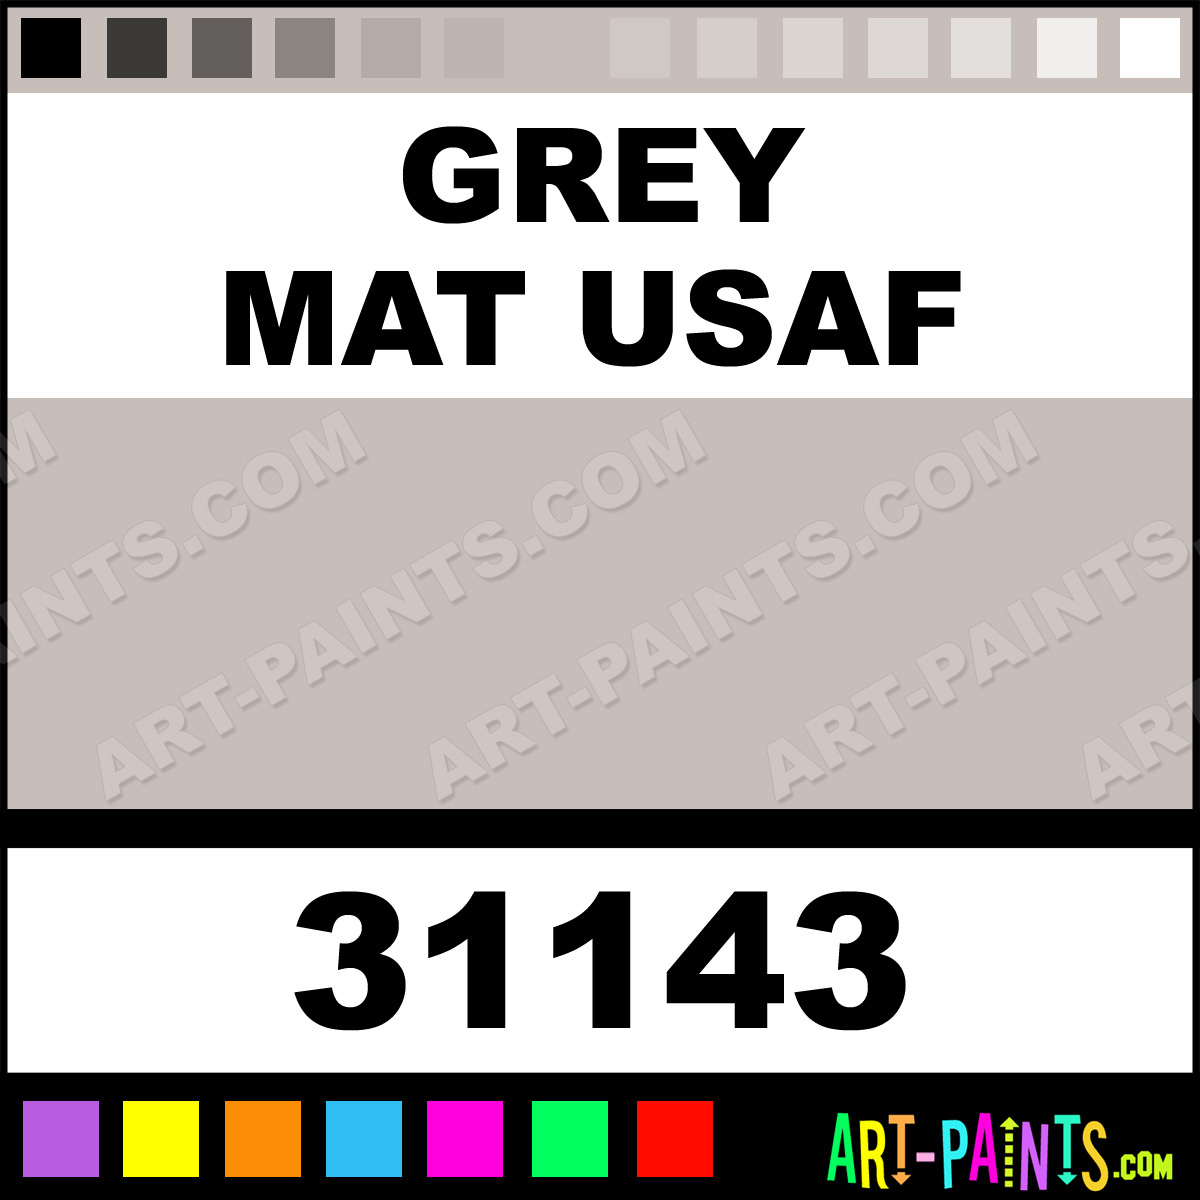 Grey-Mat-USAF-lg.jpg